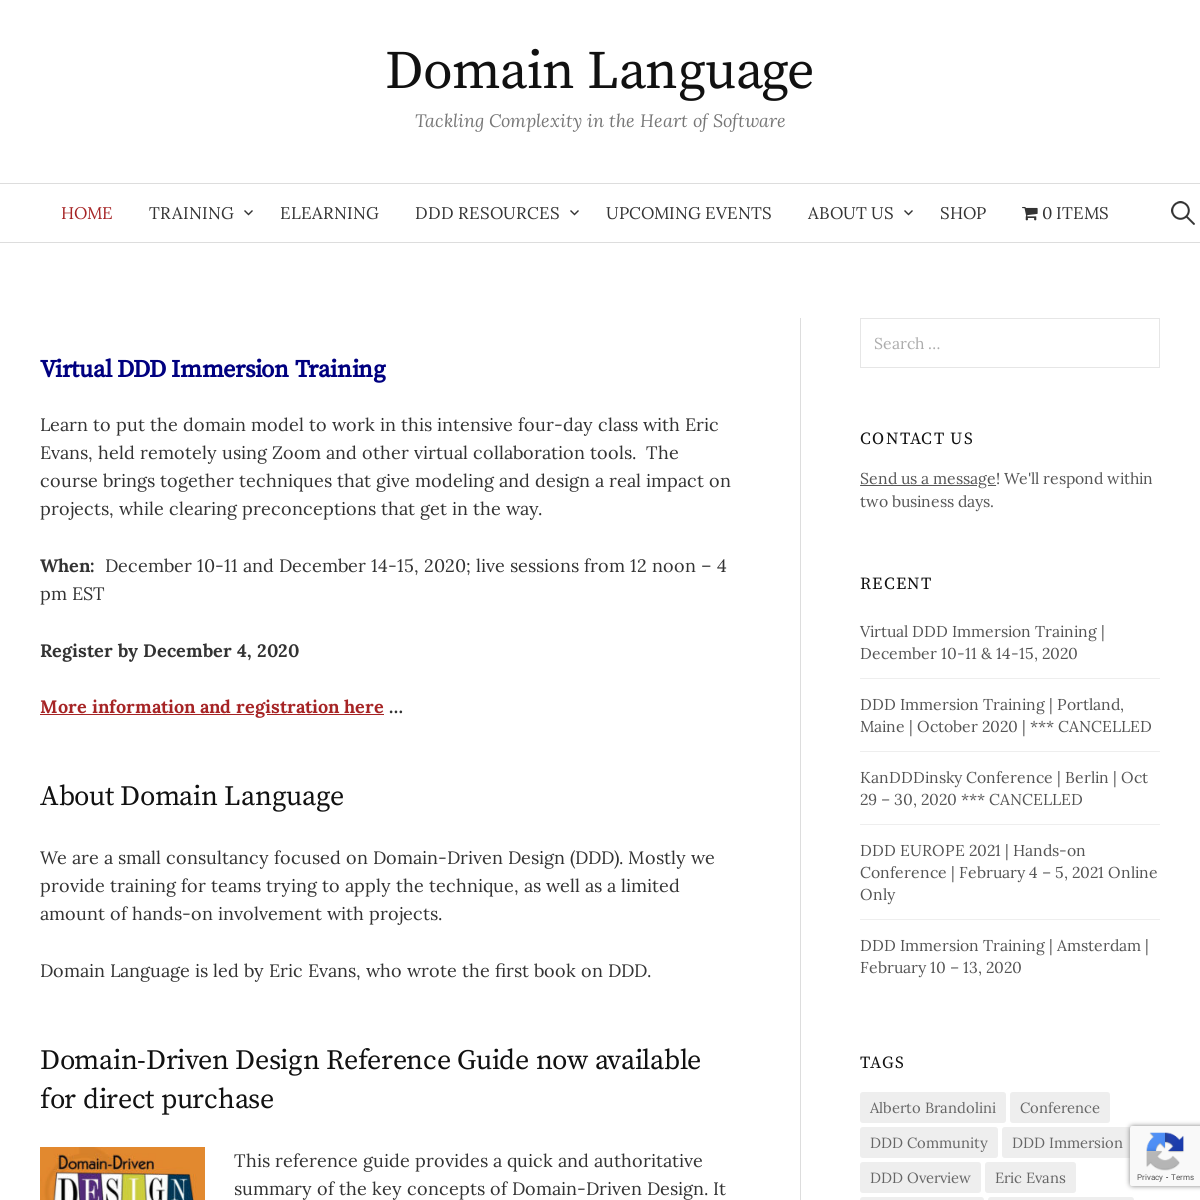 A complete backup of domainlanguage.com